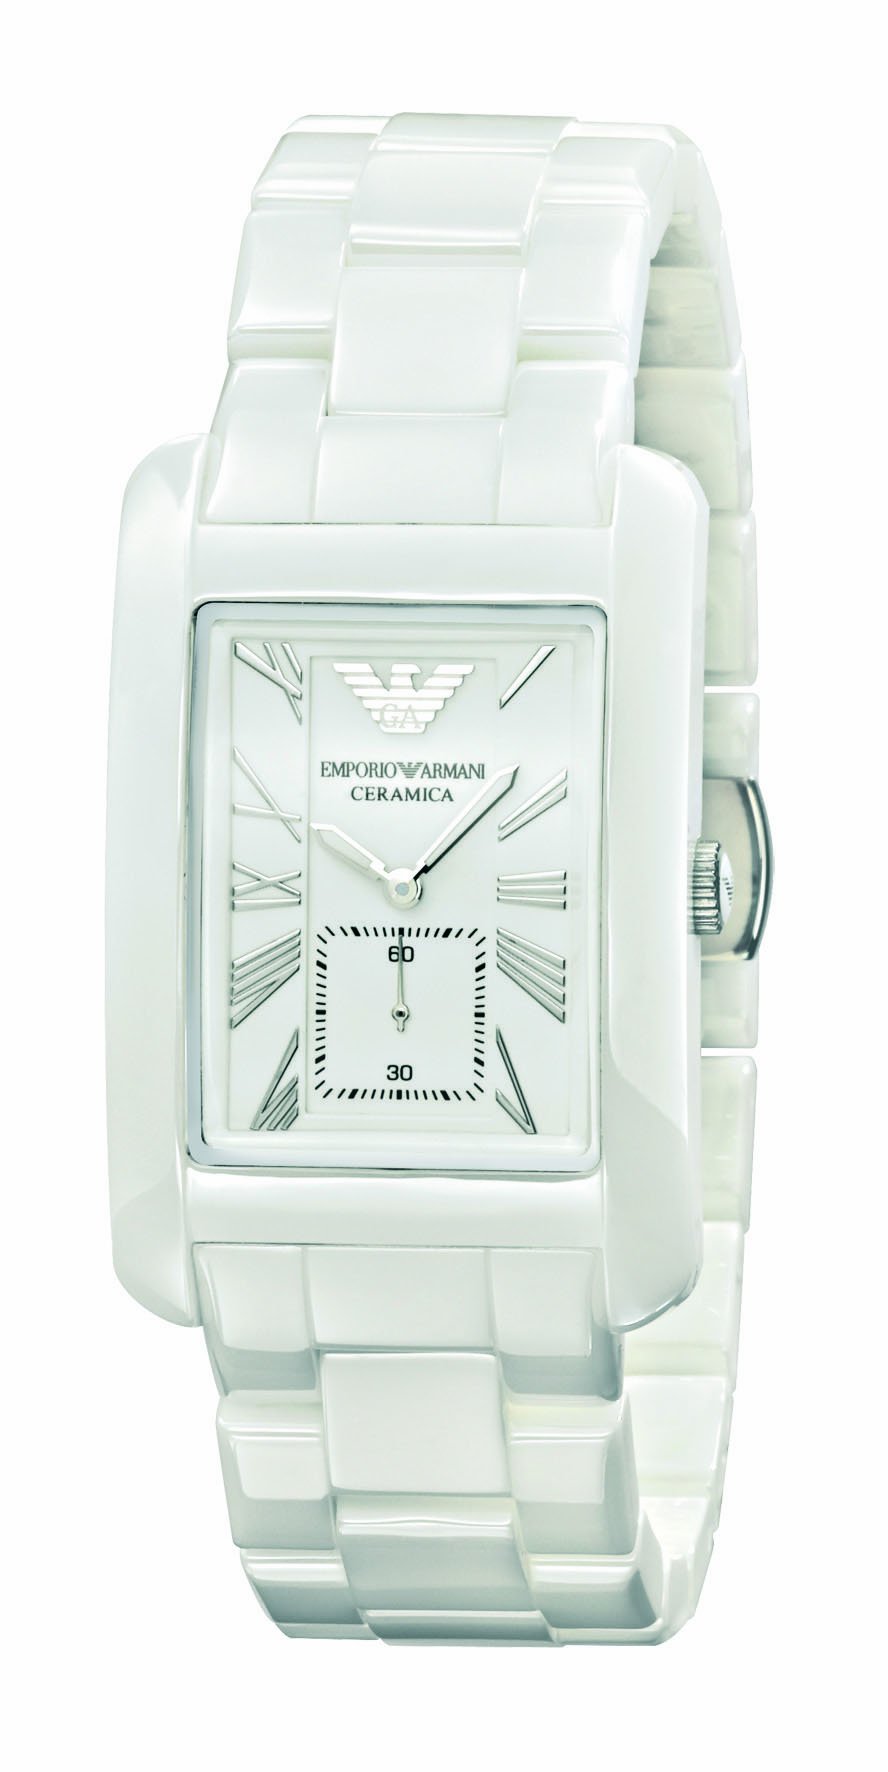 Emporio Armani Men's White Ceramic Watch